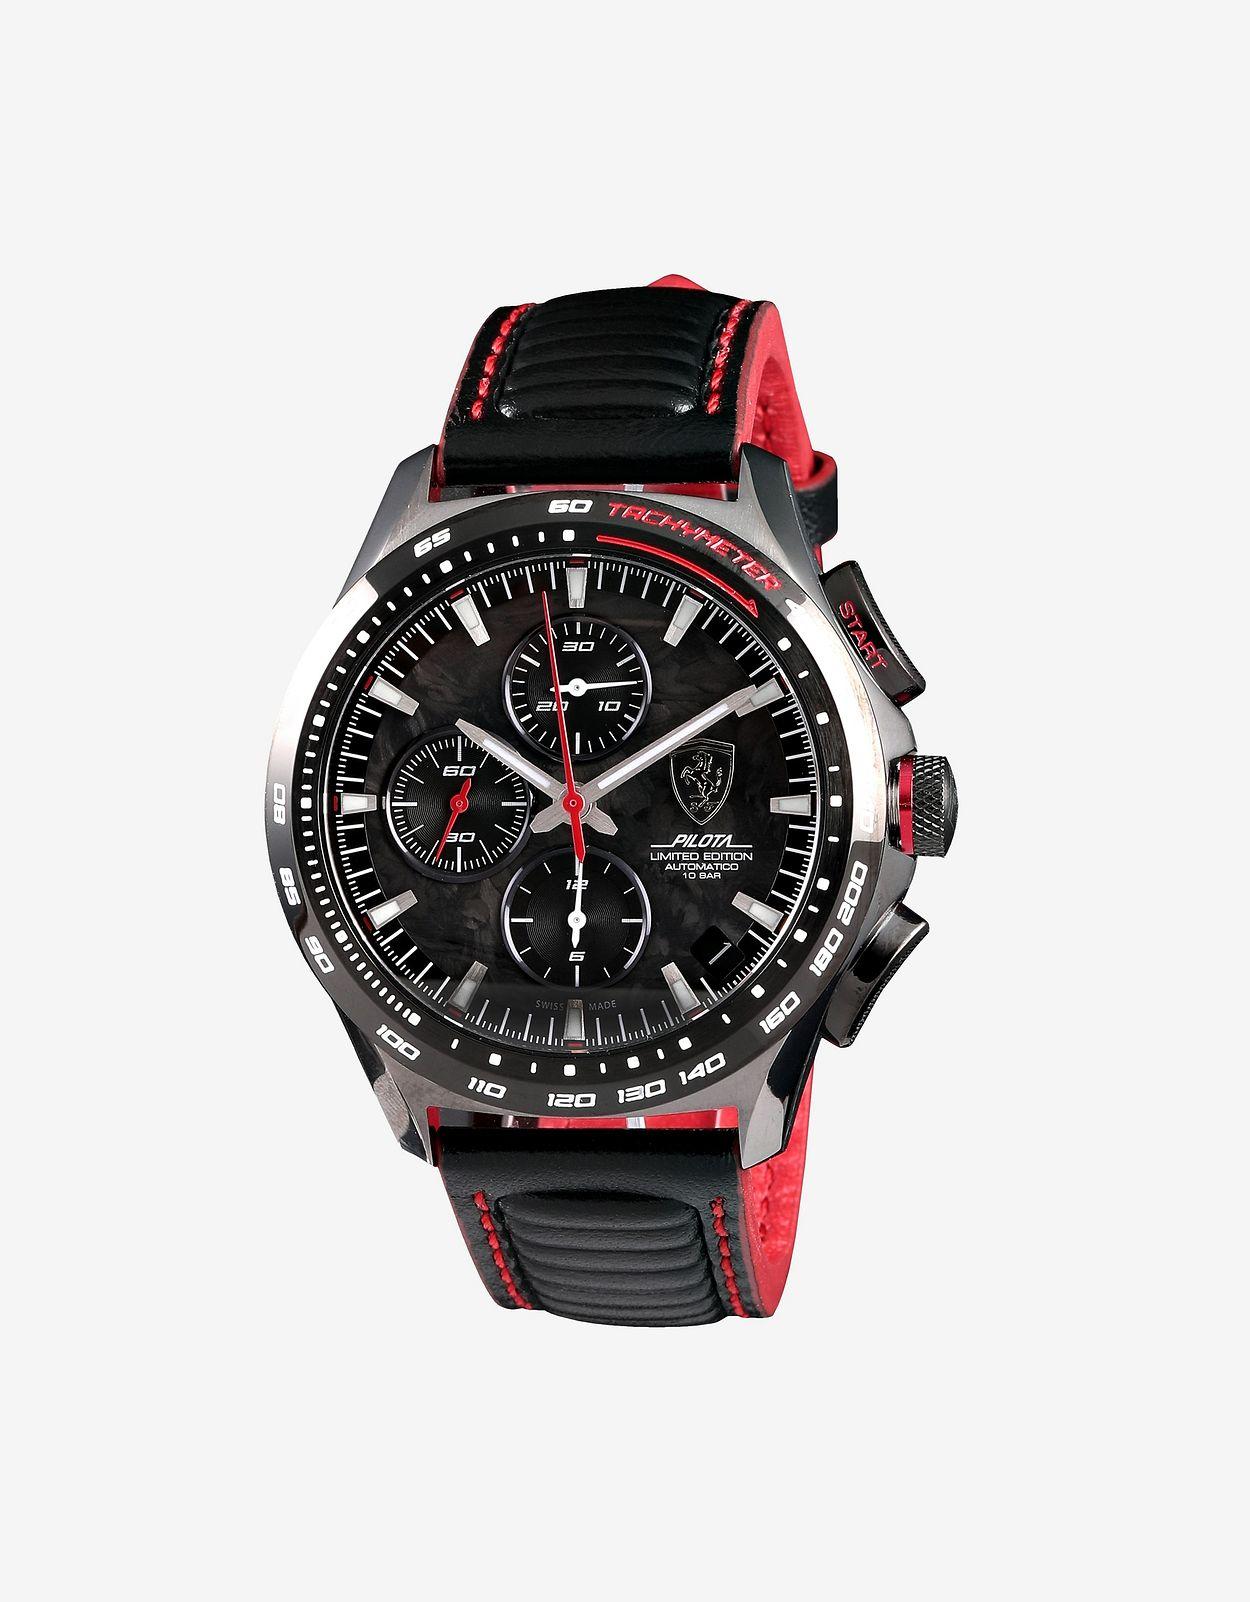 Swiss Made Limited Edition Pilota Evo chronograph watch